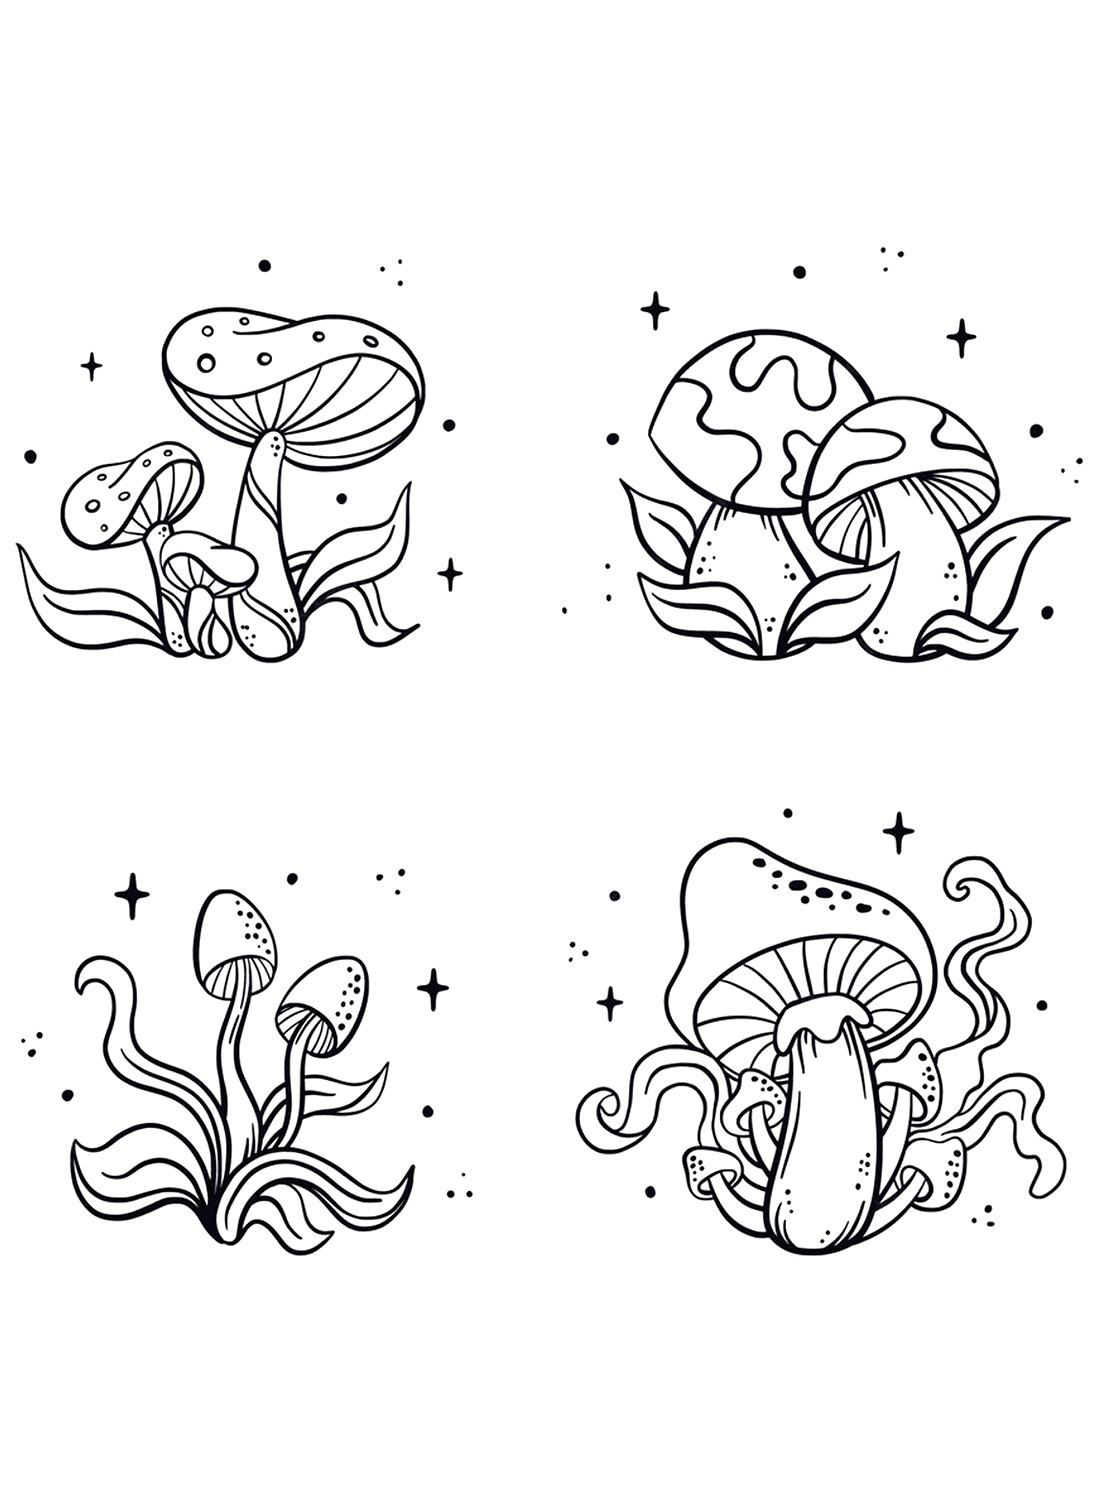 Color and print Fun Mushroom